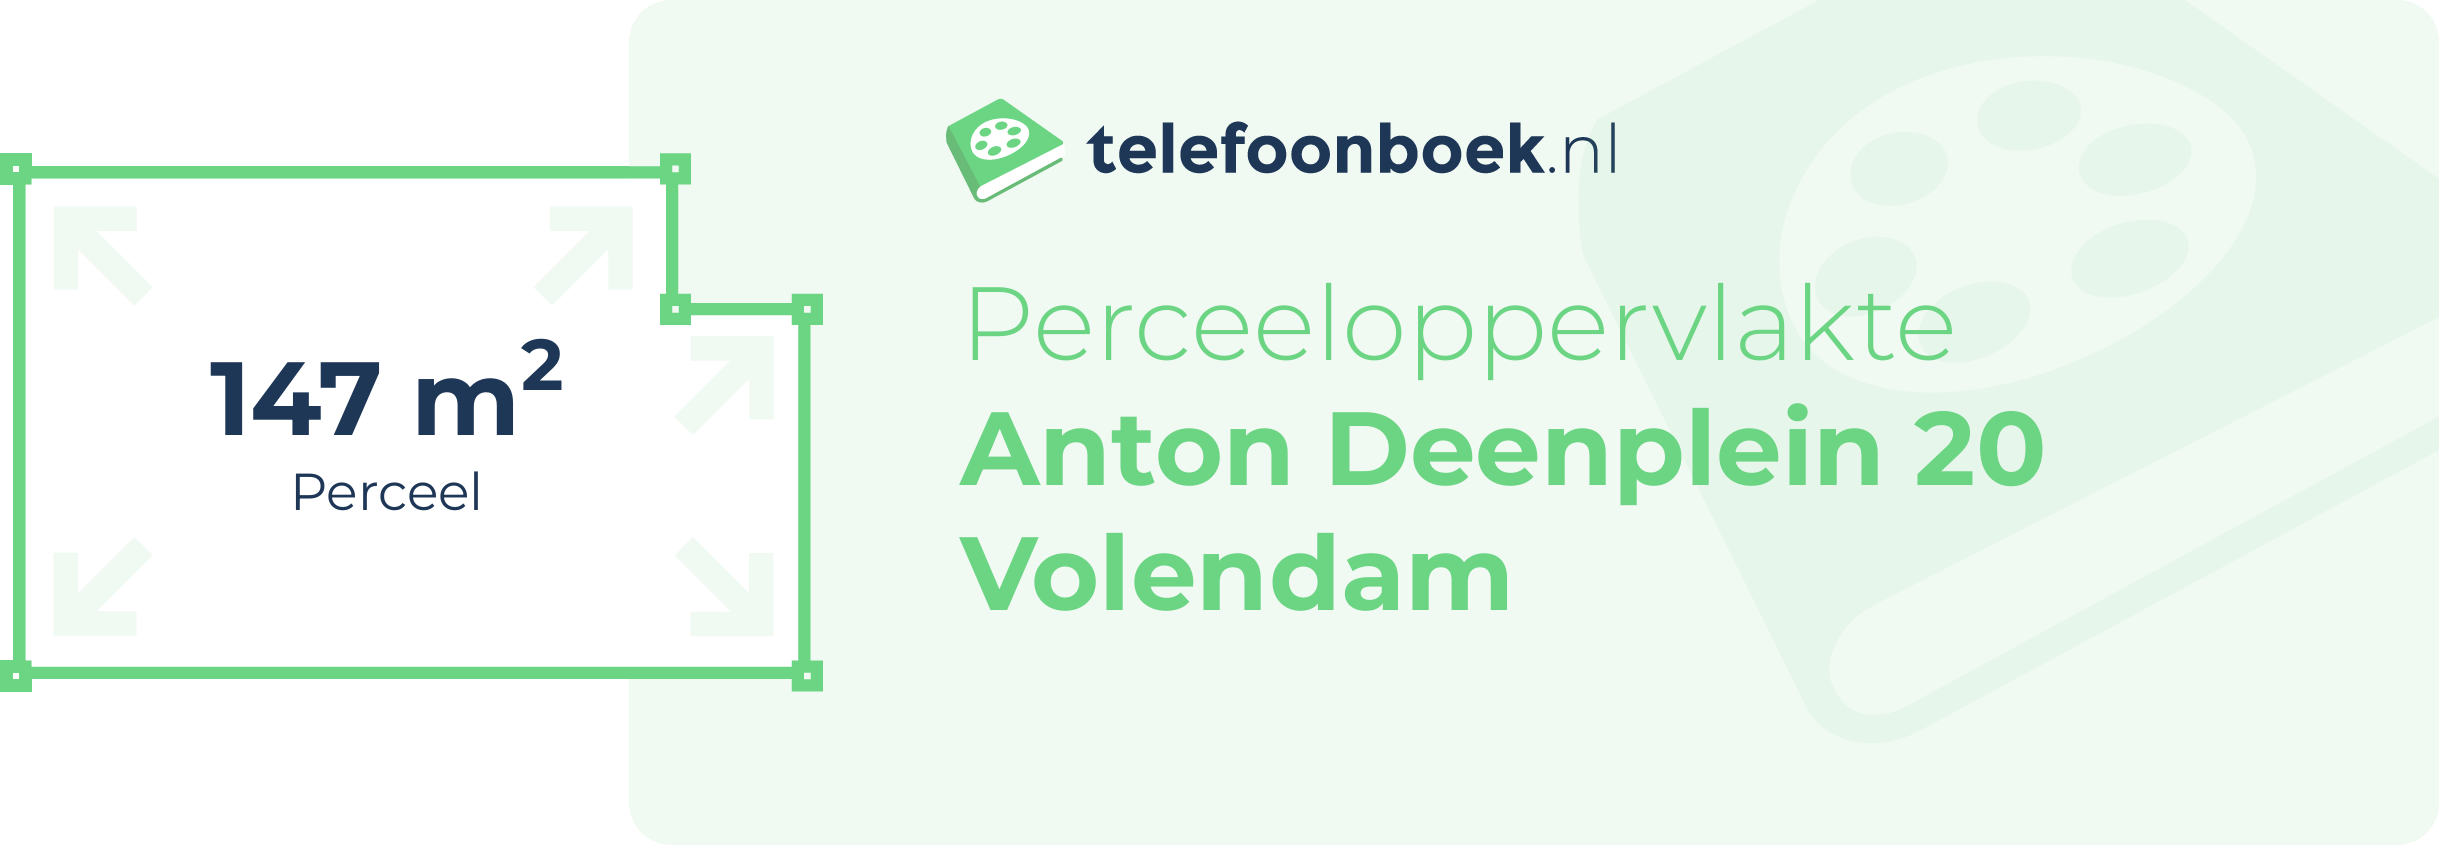 Perceeloppervlakte Anton Deenplein 20 Volendam